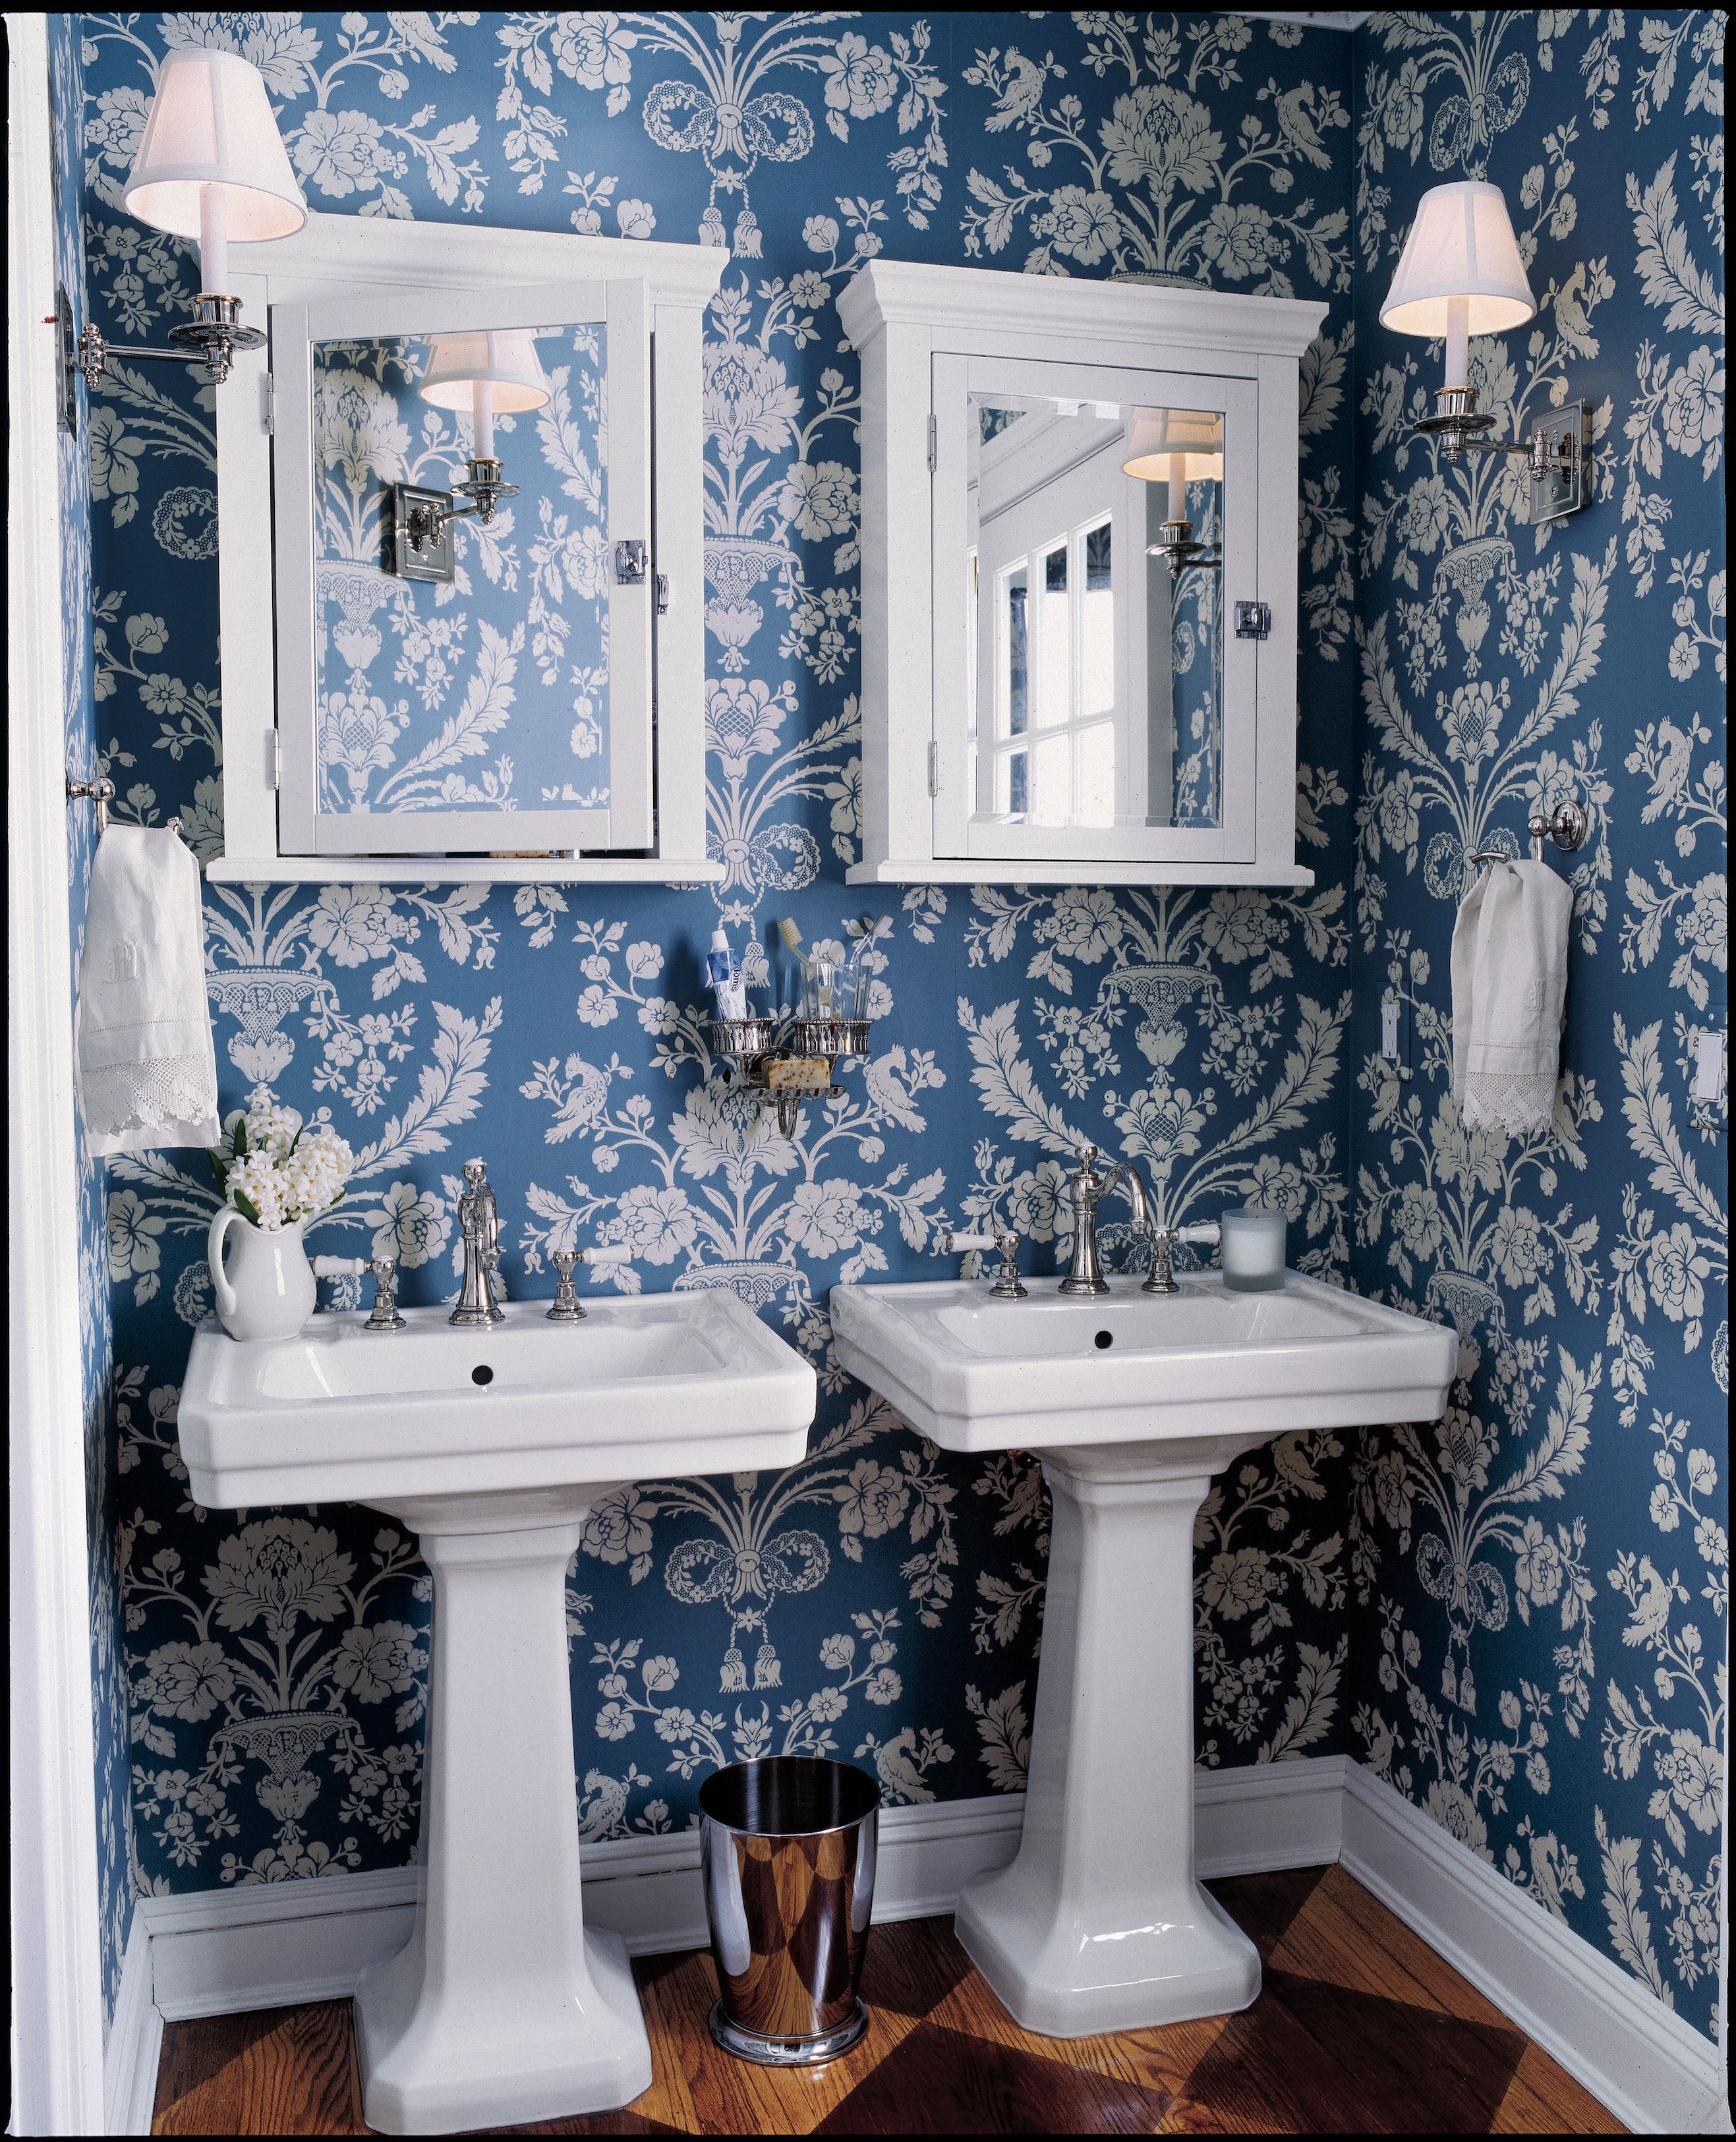 Free download 28 Bathroom Wallpaper Ideas Best Wallpapers for Bathrooms ... - A2qG45